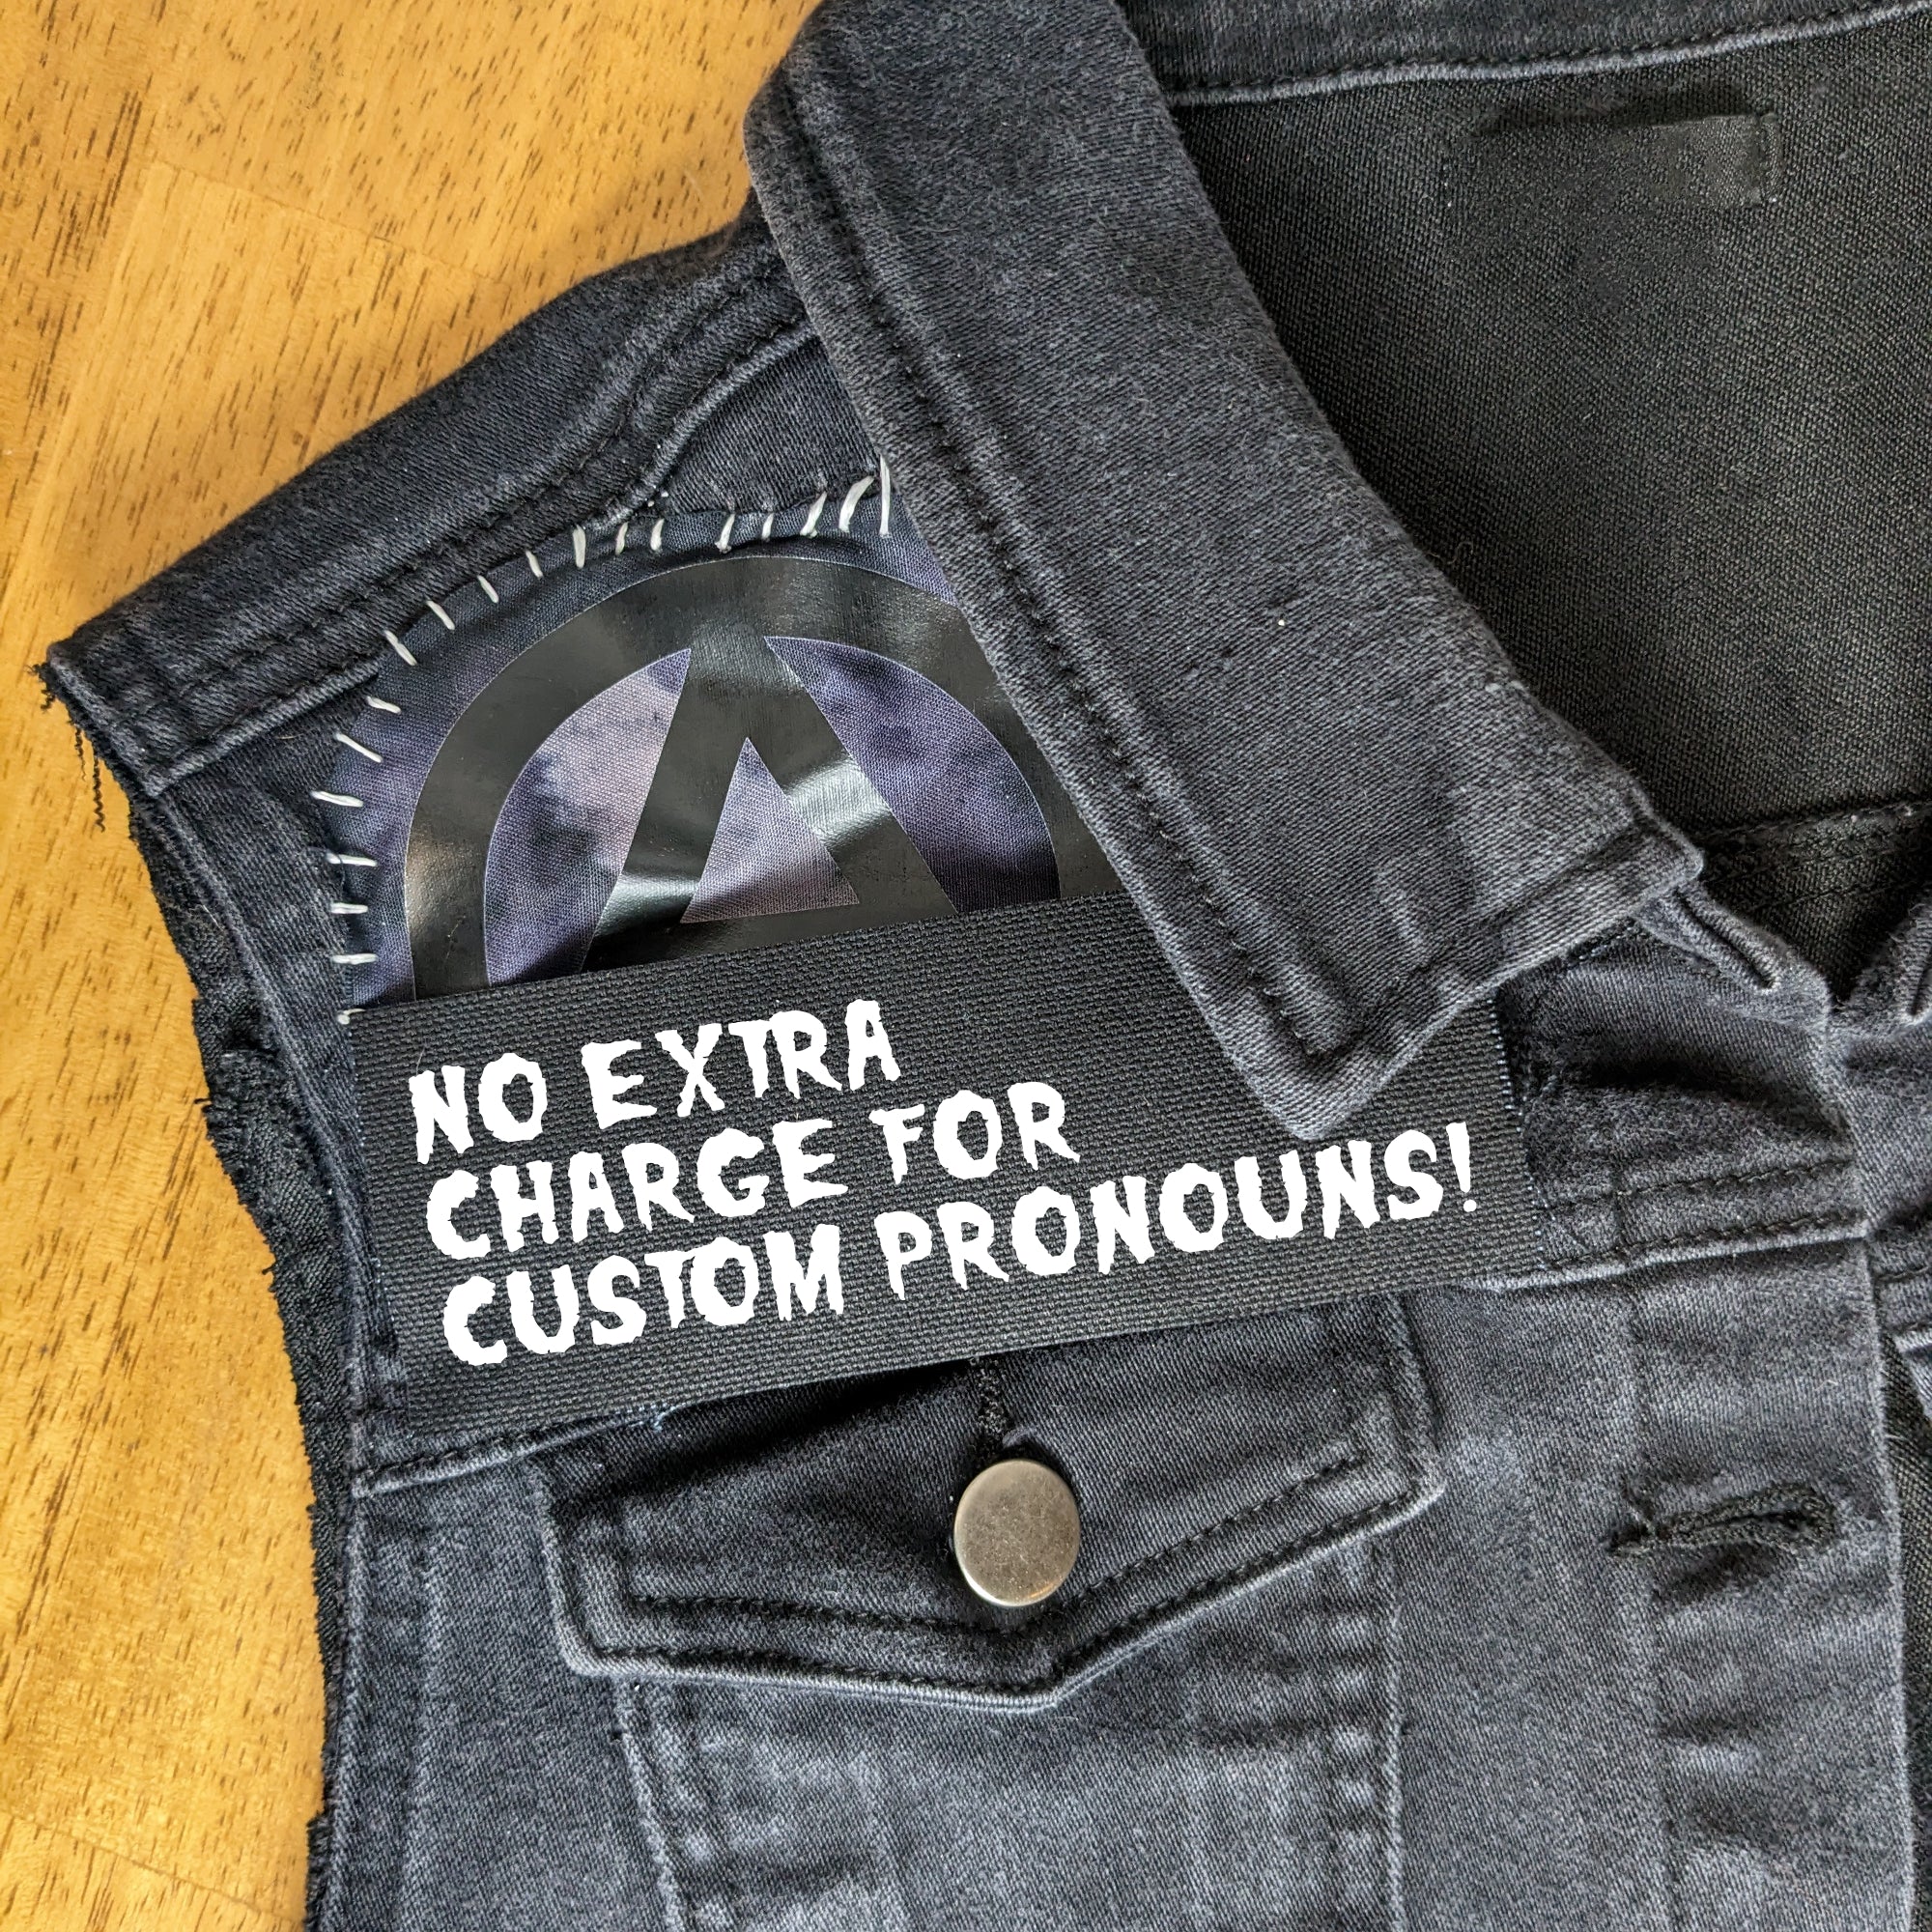 Horror Punk Sew-on Pronoun Patches - Customizable!